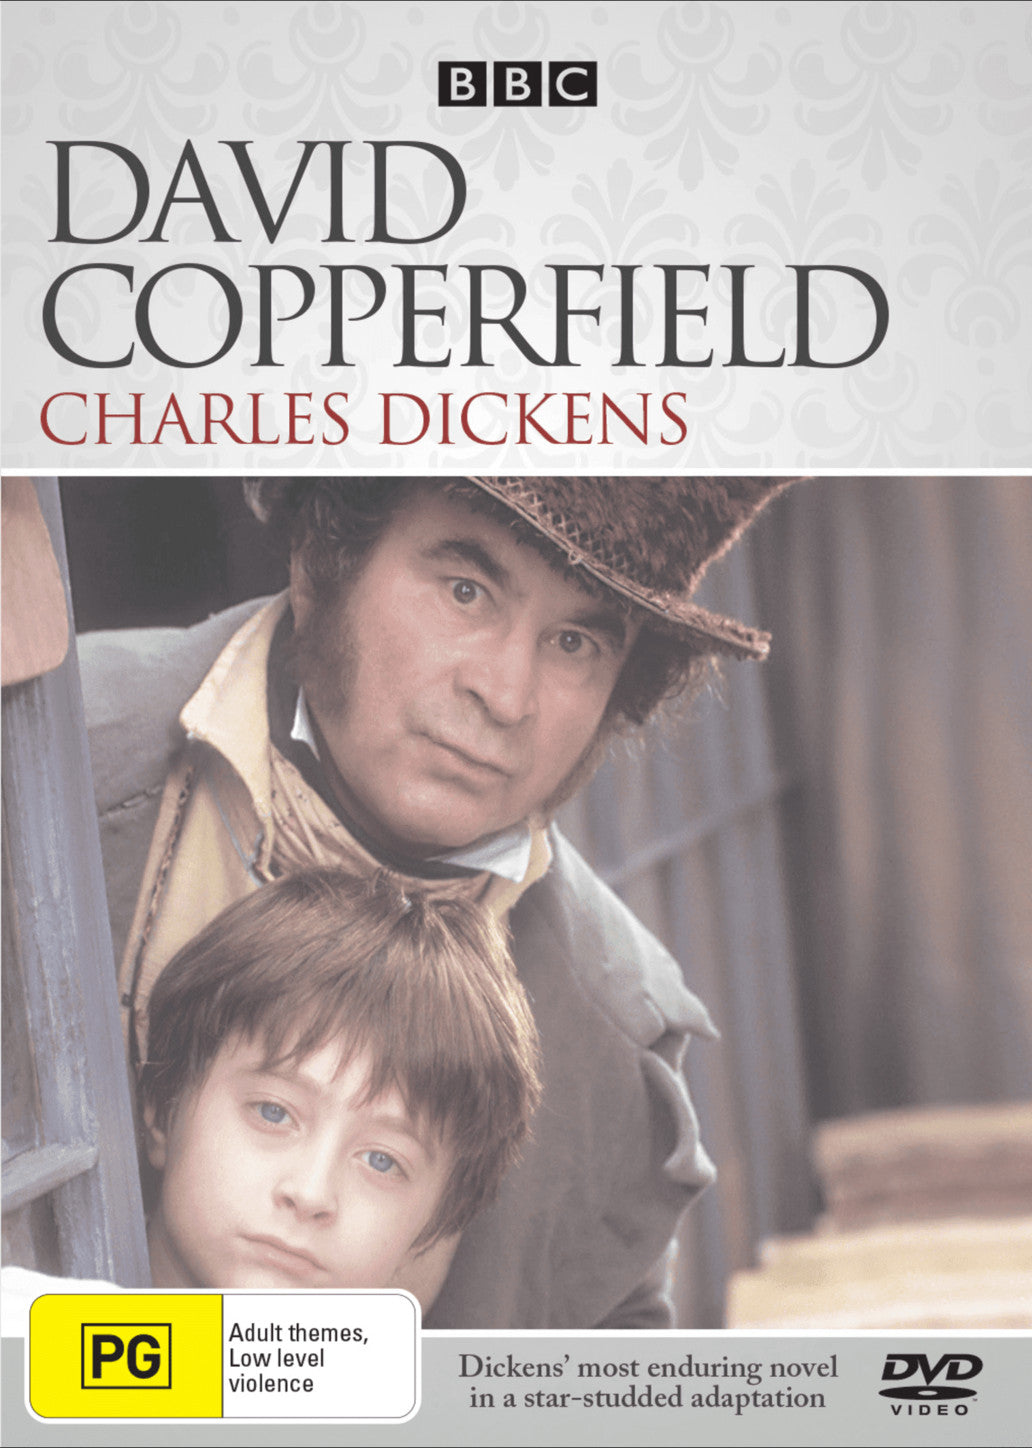 DAVID COPPERFIELD (1999)